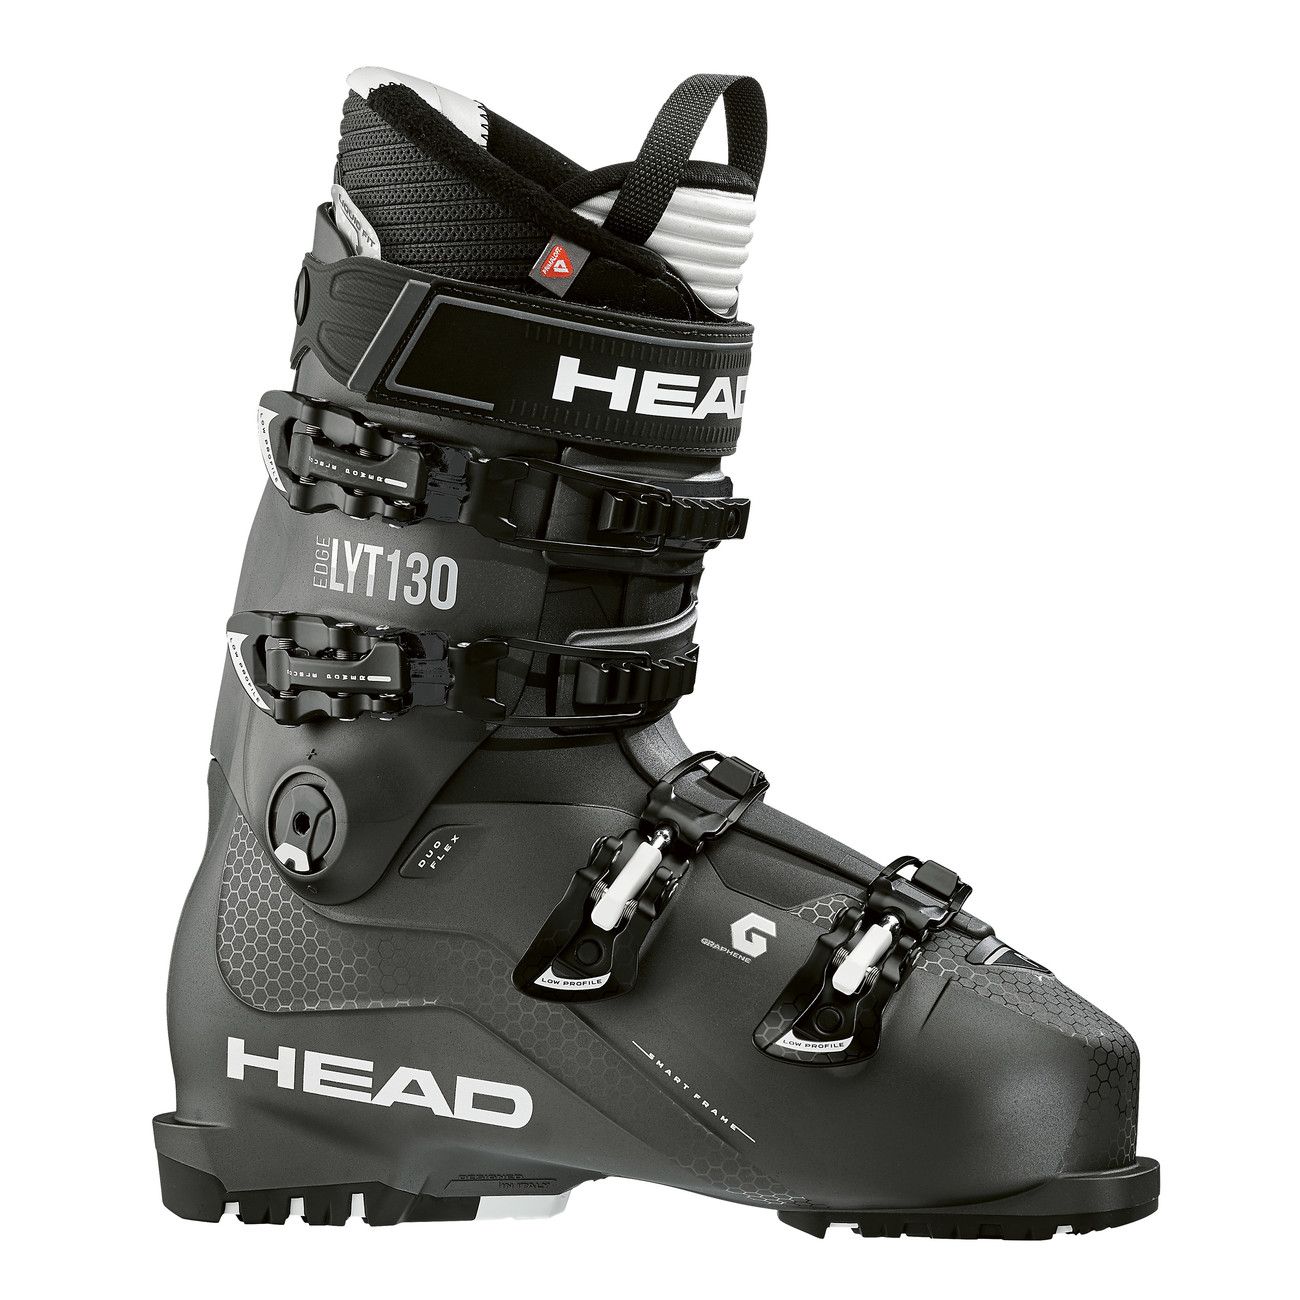 Chaussure de ski Head Edge Lyt 130 2020